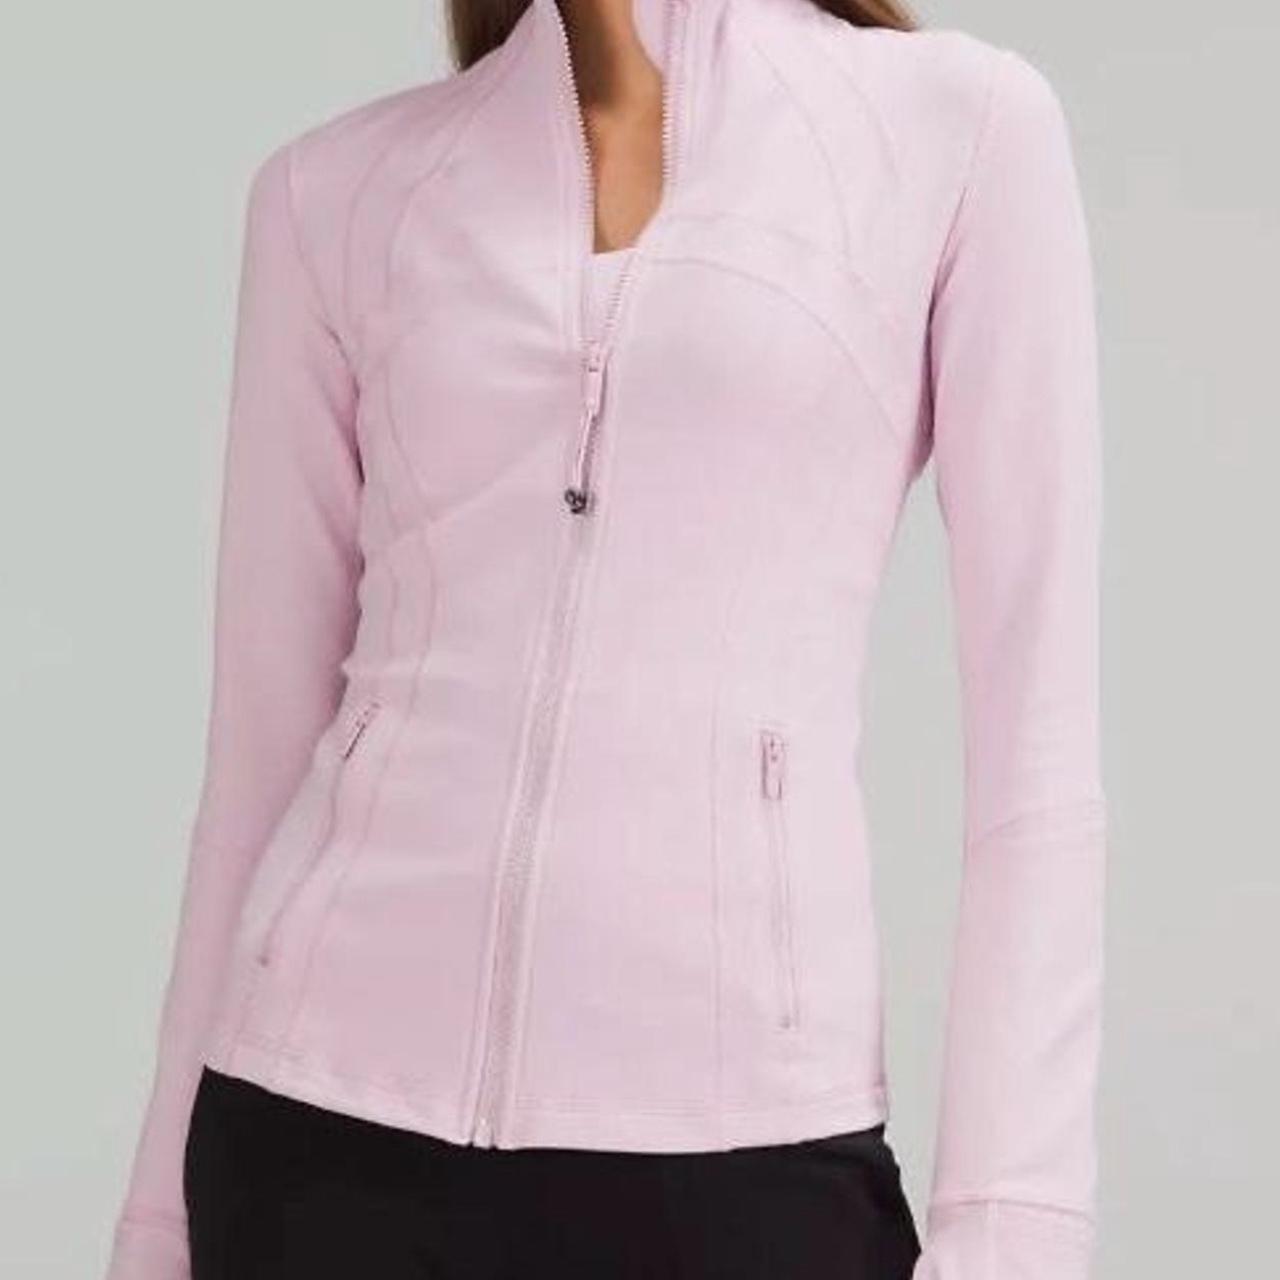 Lululemon Women's Pink Jacket (4)